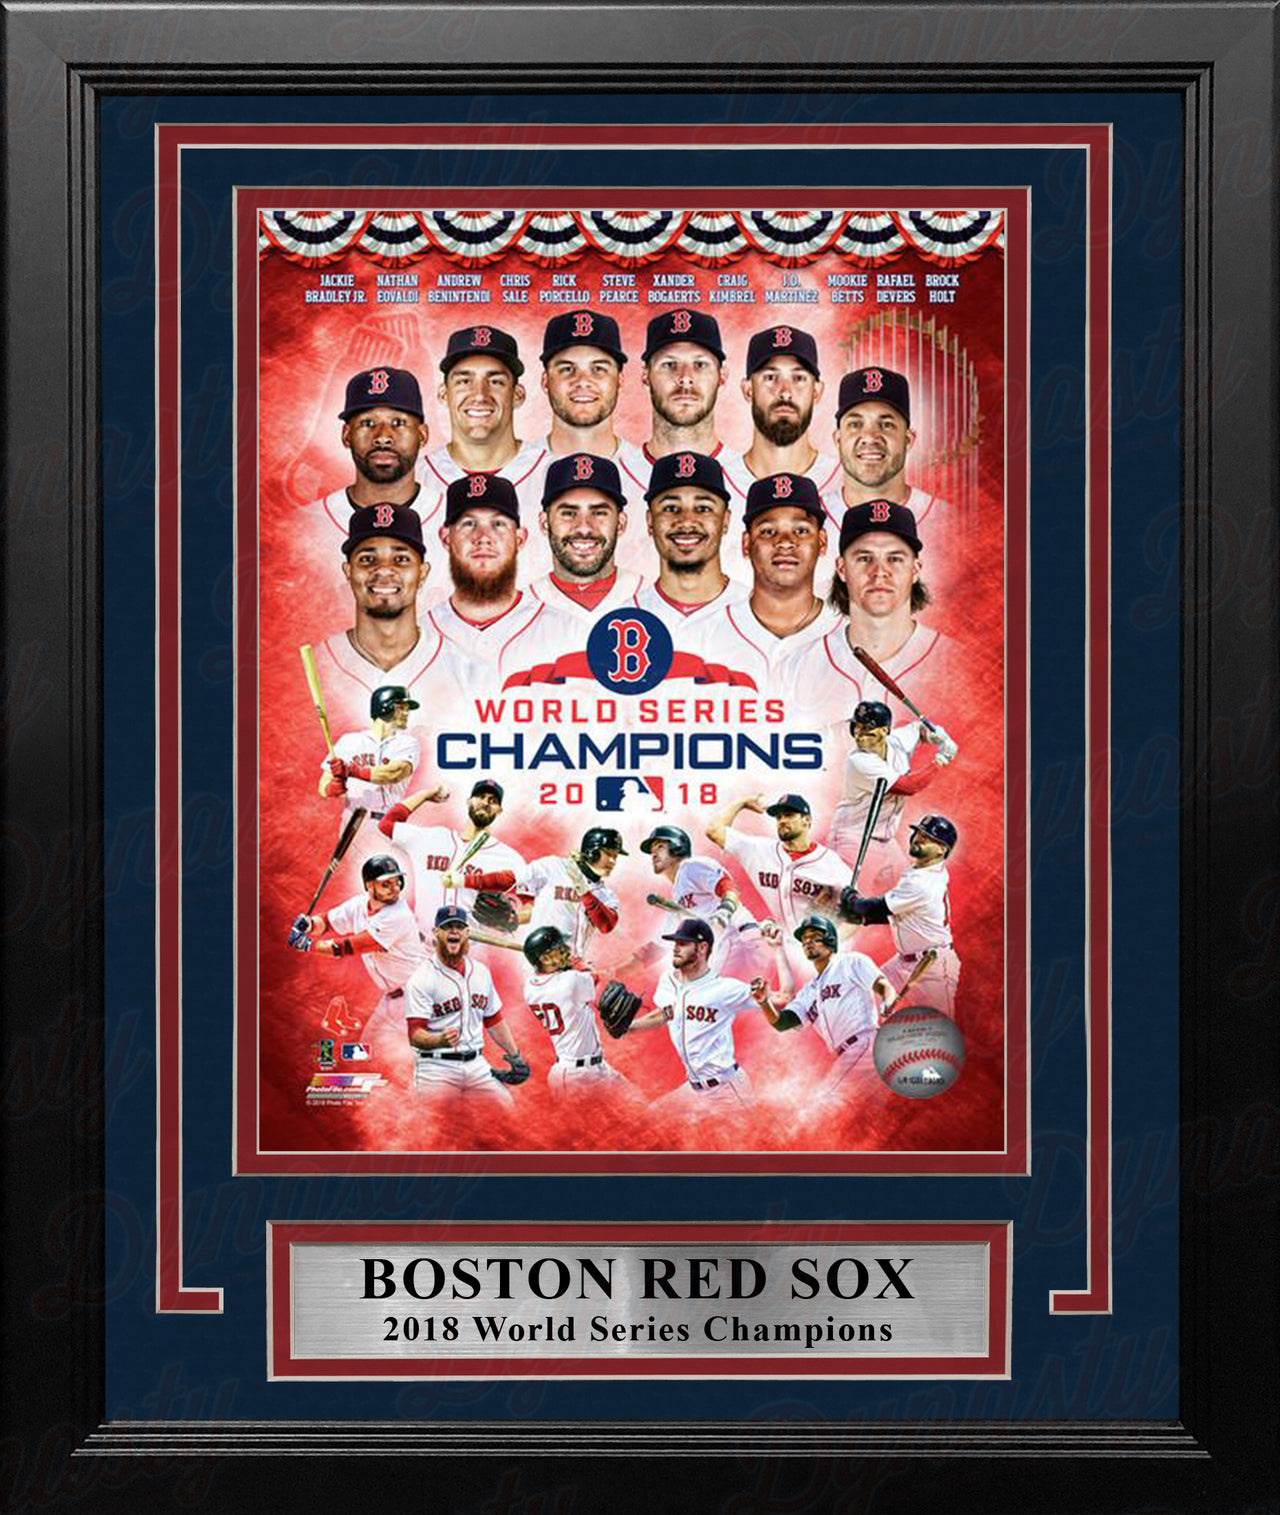 Boston Red Sox 2018 World Series Champions Team Collage 8" x 10" Framed Baseball Photo - Dynasty Sports & Framing 